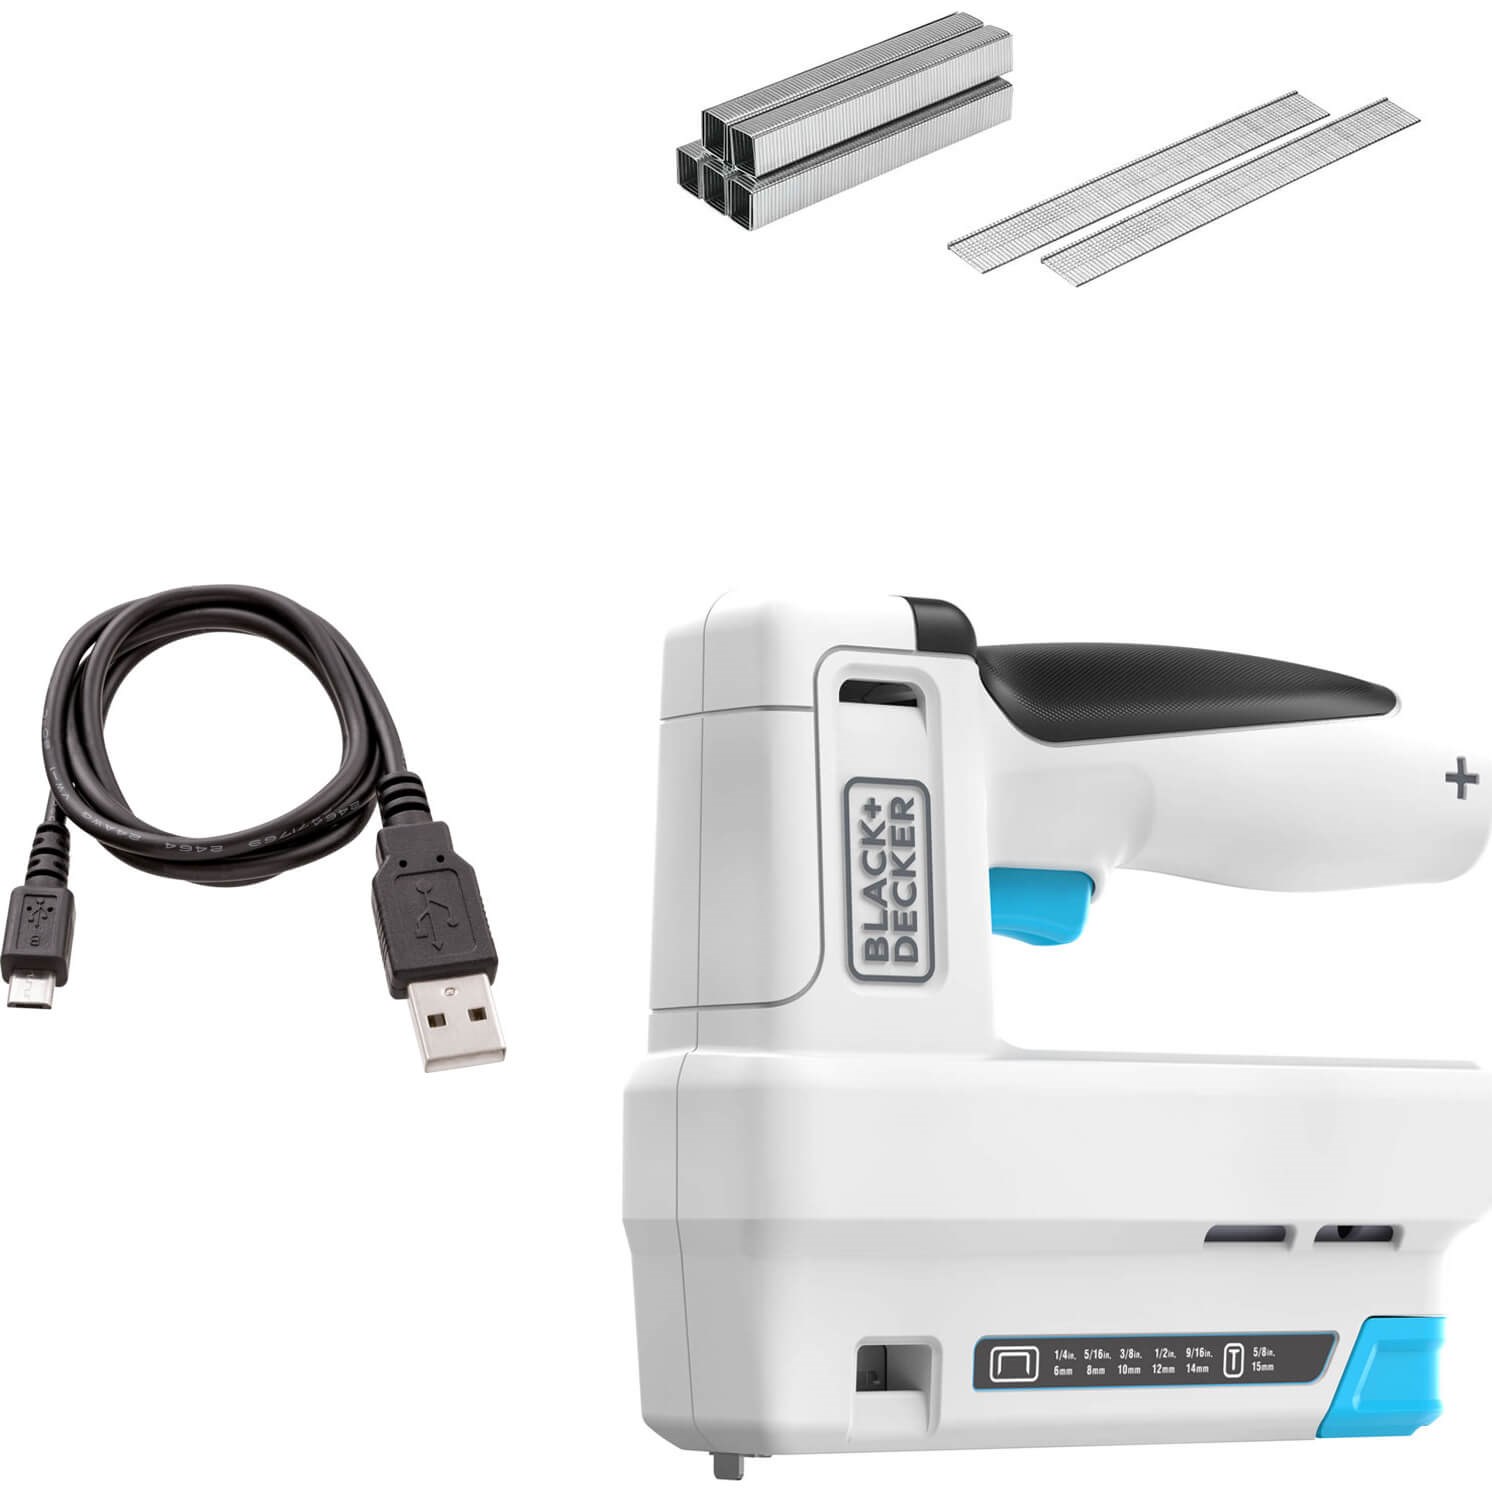 https://www.tooled-up.com/artwork/prodzoom/BD-BCN115-Black-and-Decker-3.6v-Cordless-Stapler-and-18-Gauge-Brad-Nailer-USB-Cable.jpg?w=1600&h=1600&404=default